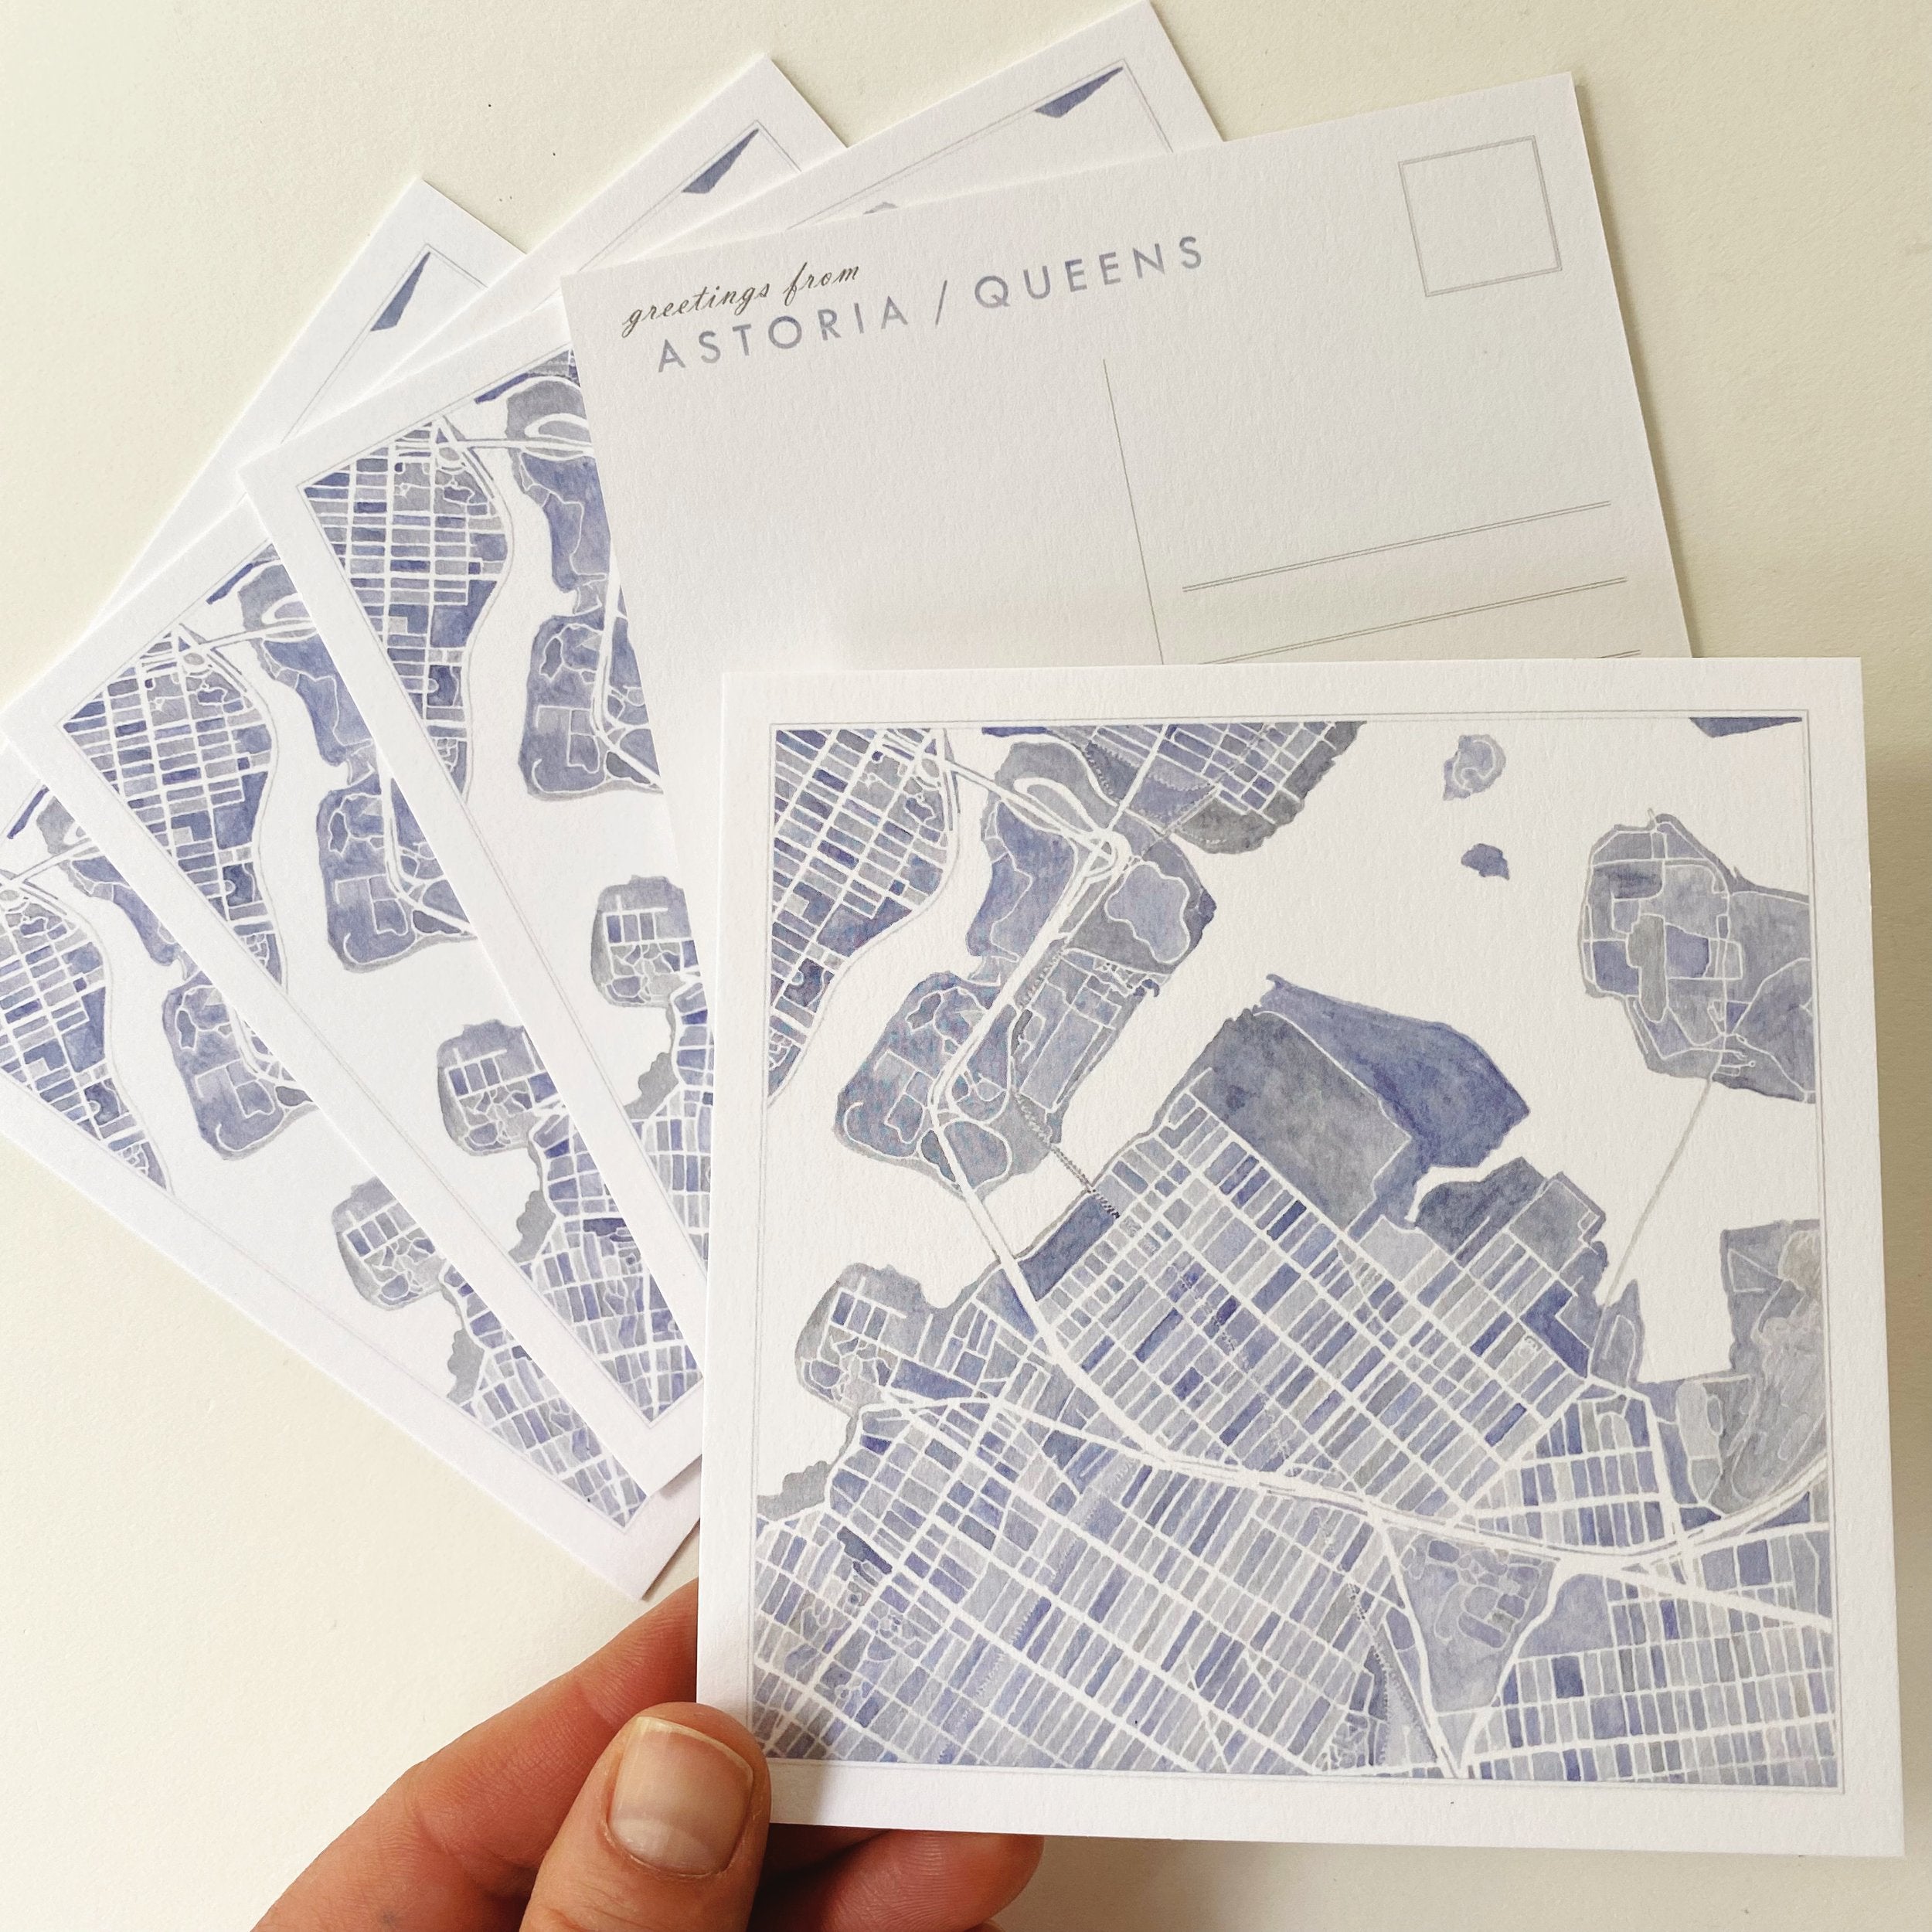 ASTORIA/QUEENS New York Map Postcard